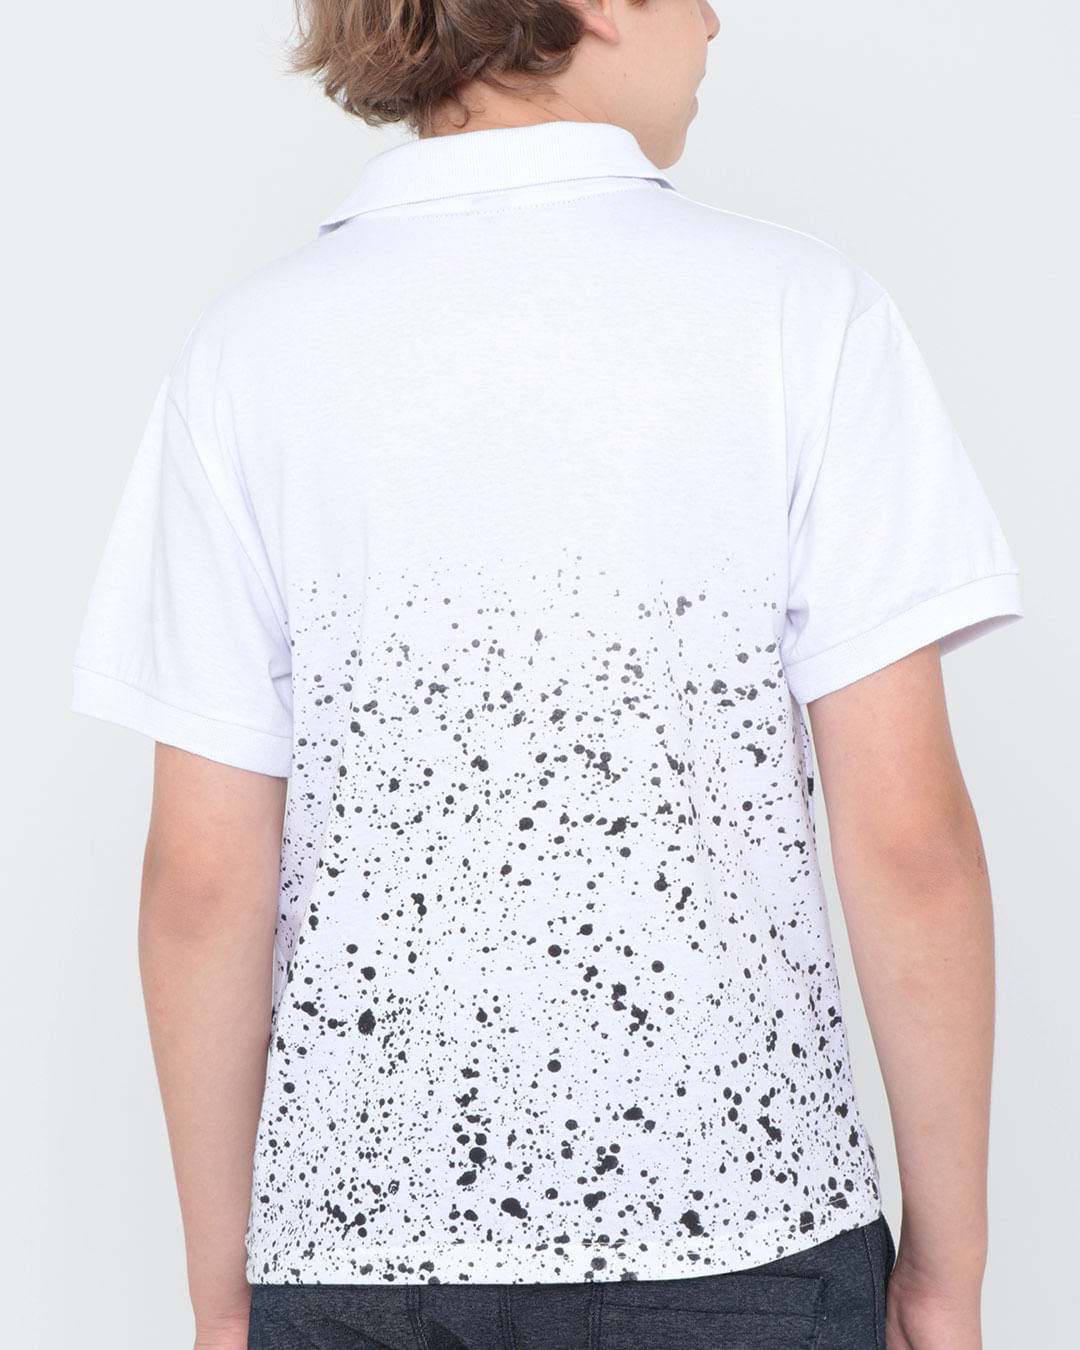 Camiseta-Ib9756-Polo-Mc-M-1016---Branco